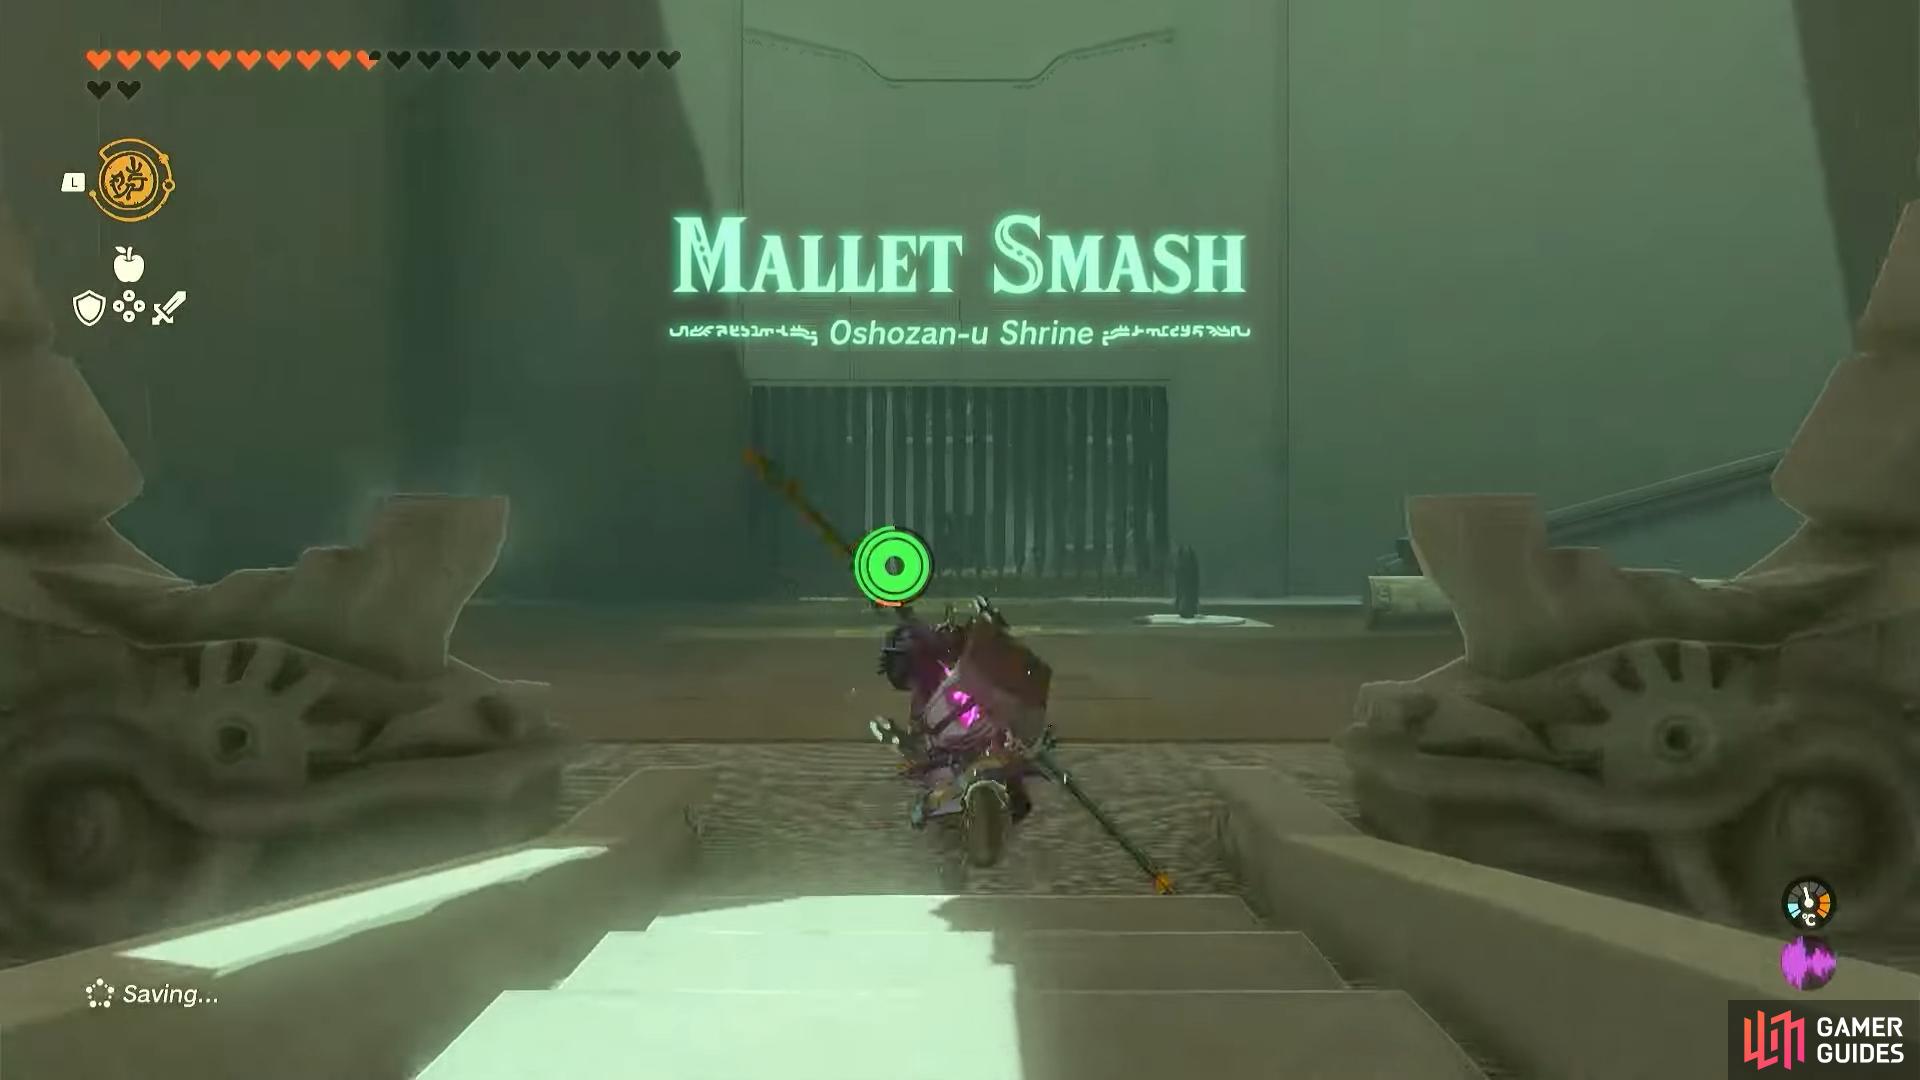 The Mallet Smash challenge.